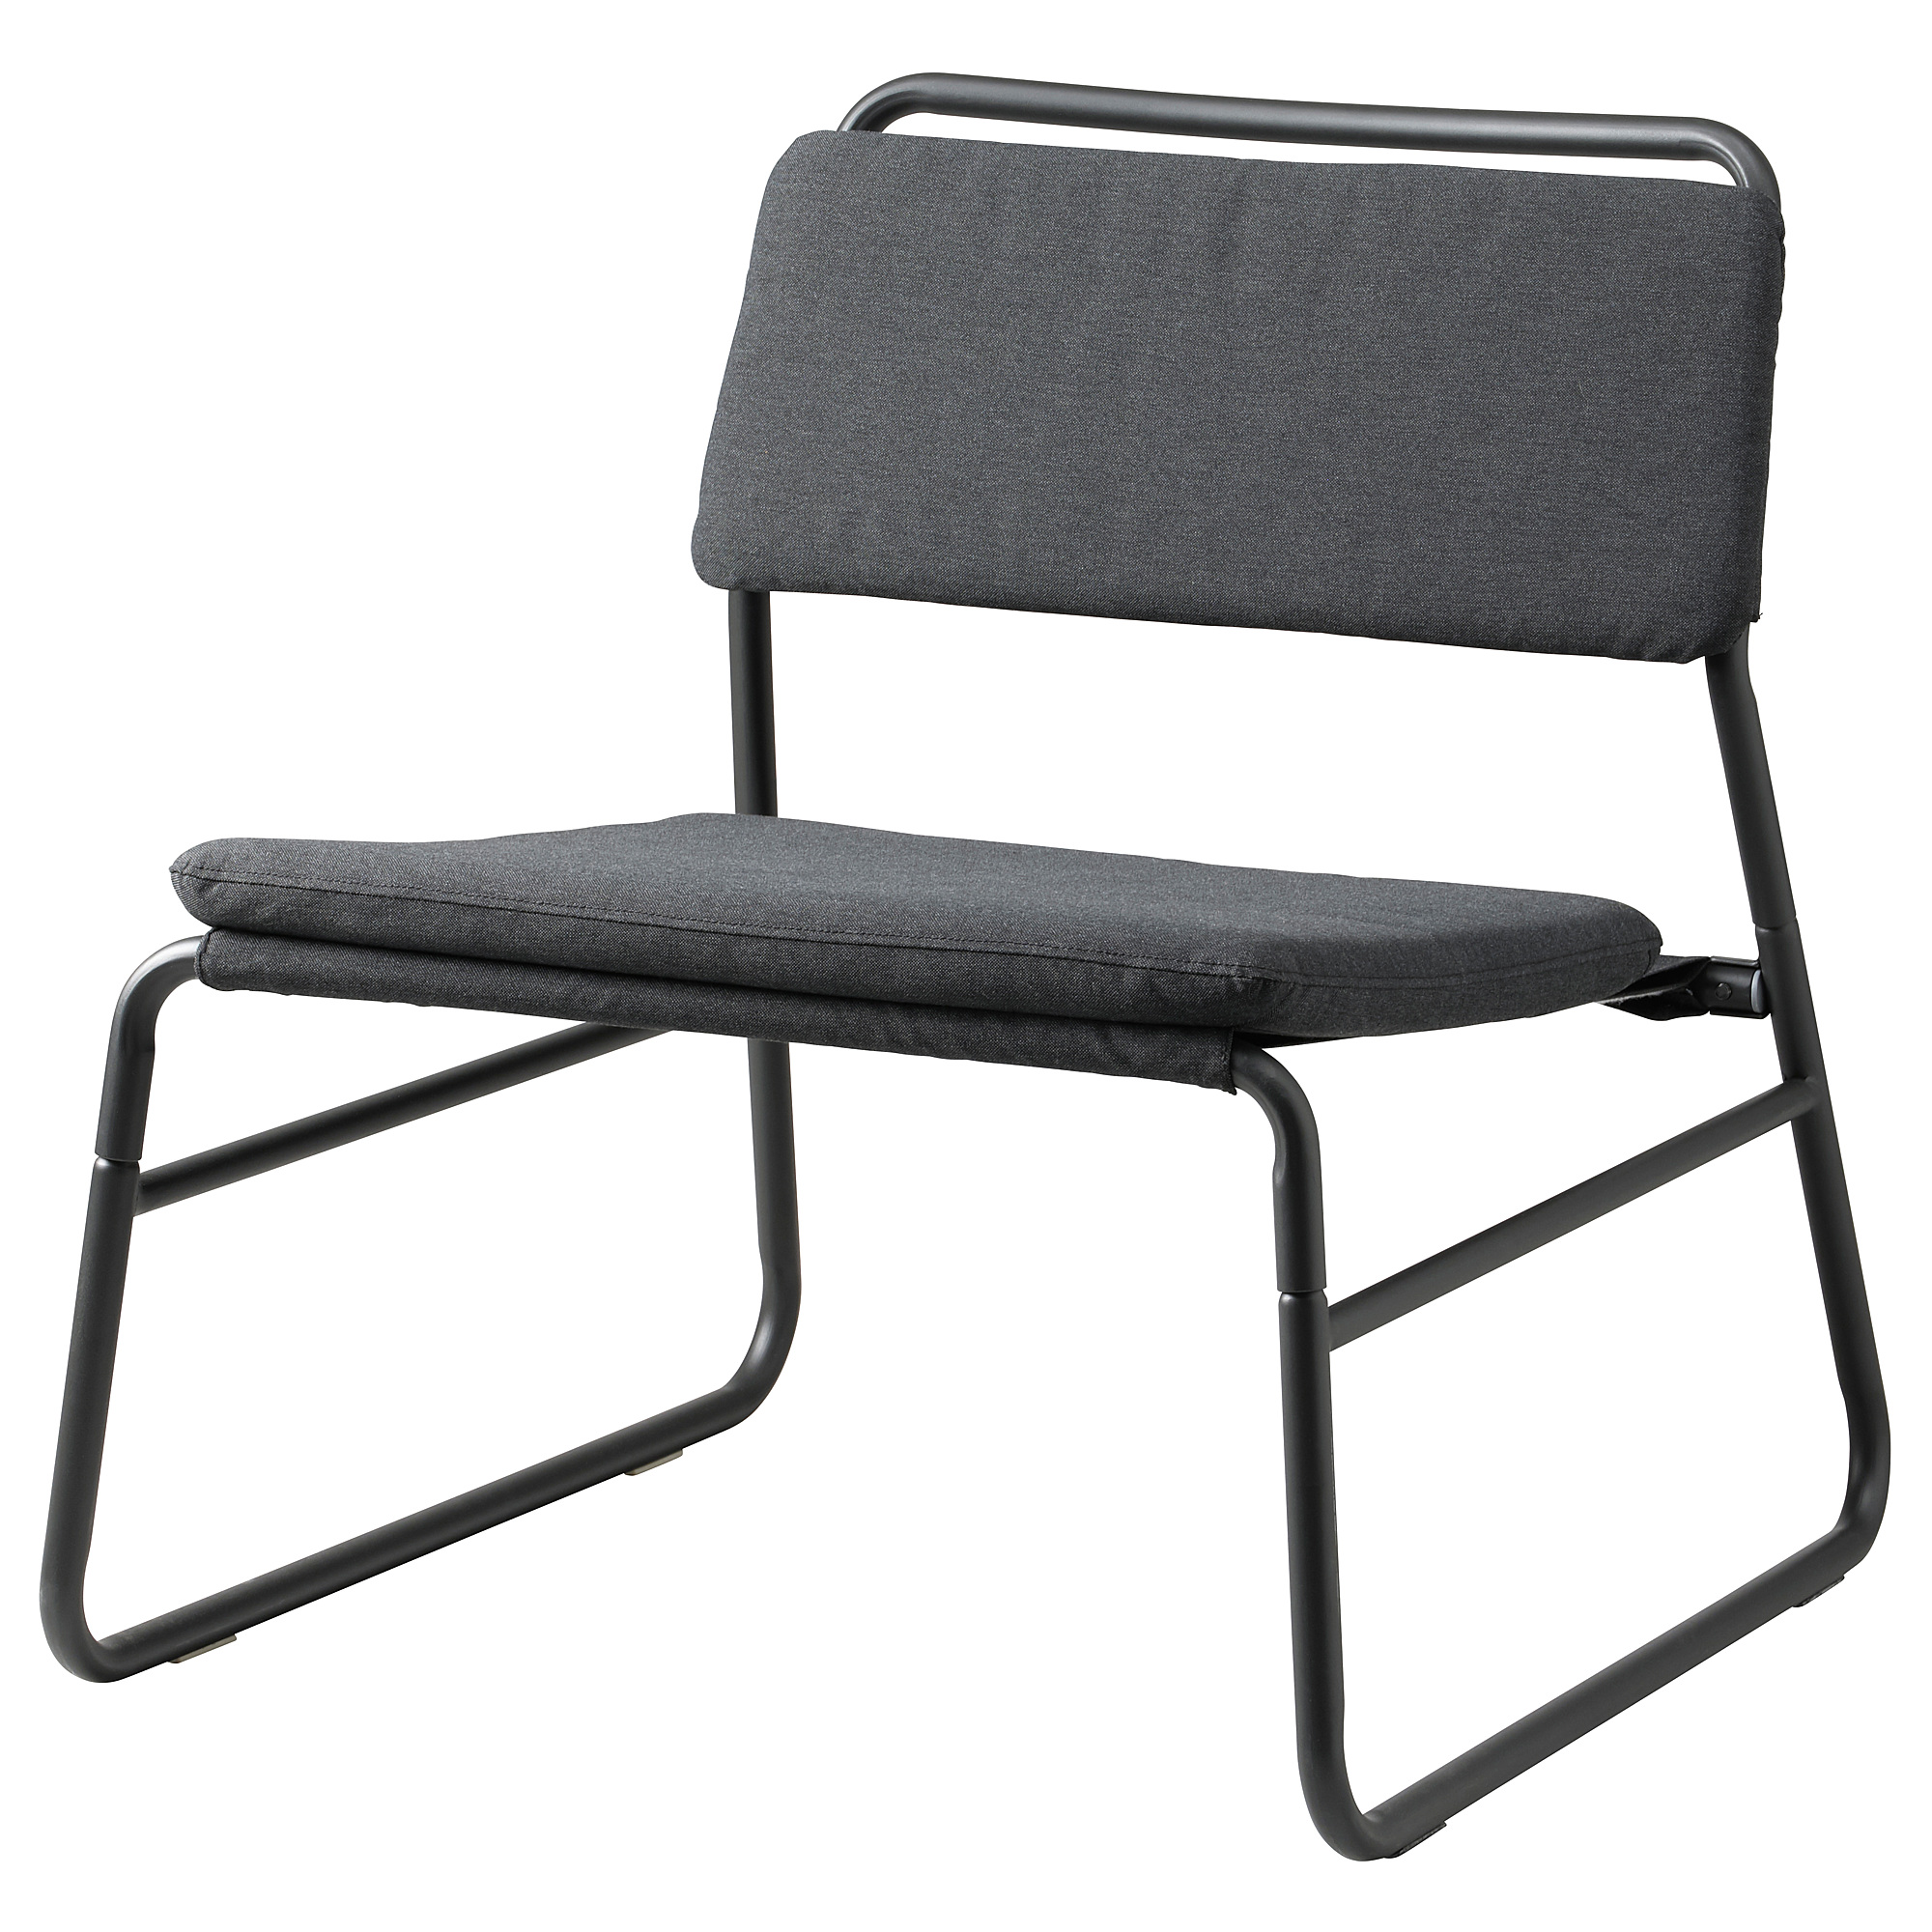 LINNEBÄCK easy chair